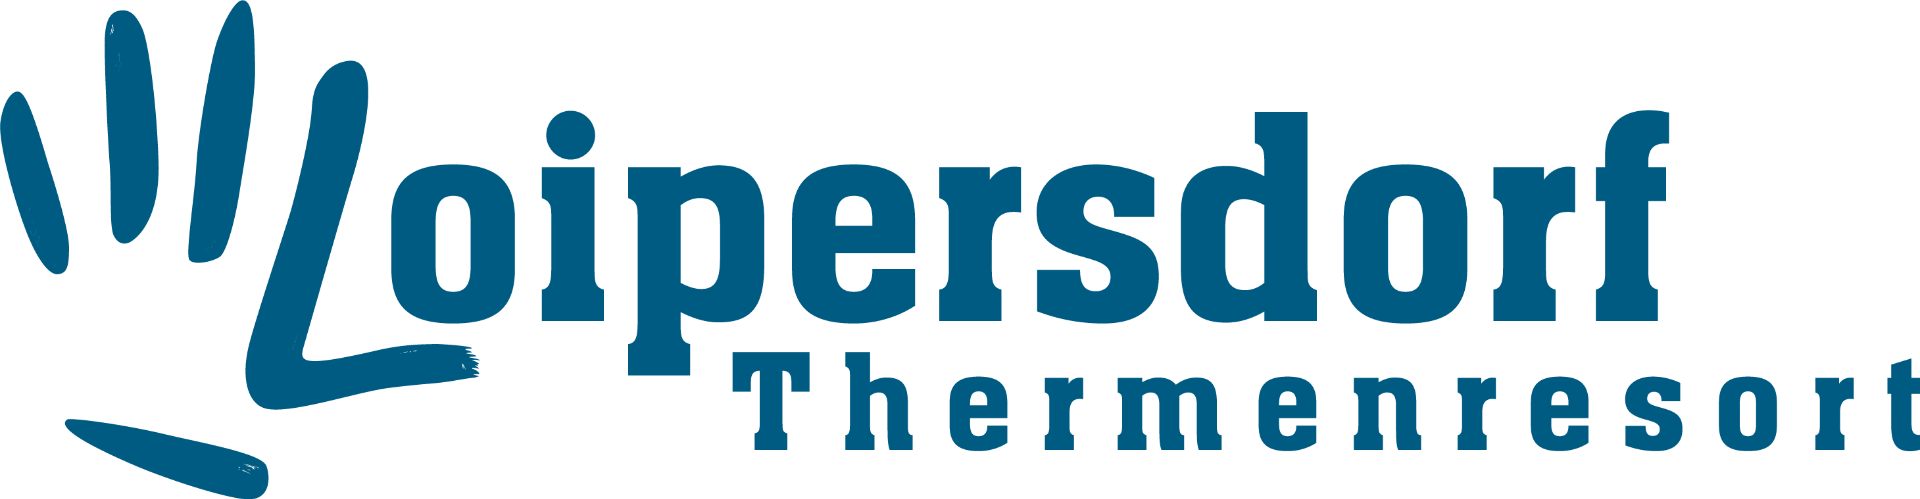 Loipersdorf_Logo+Thermenregion_4c.png